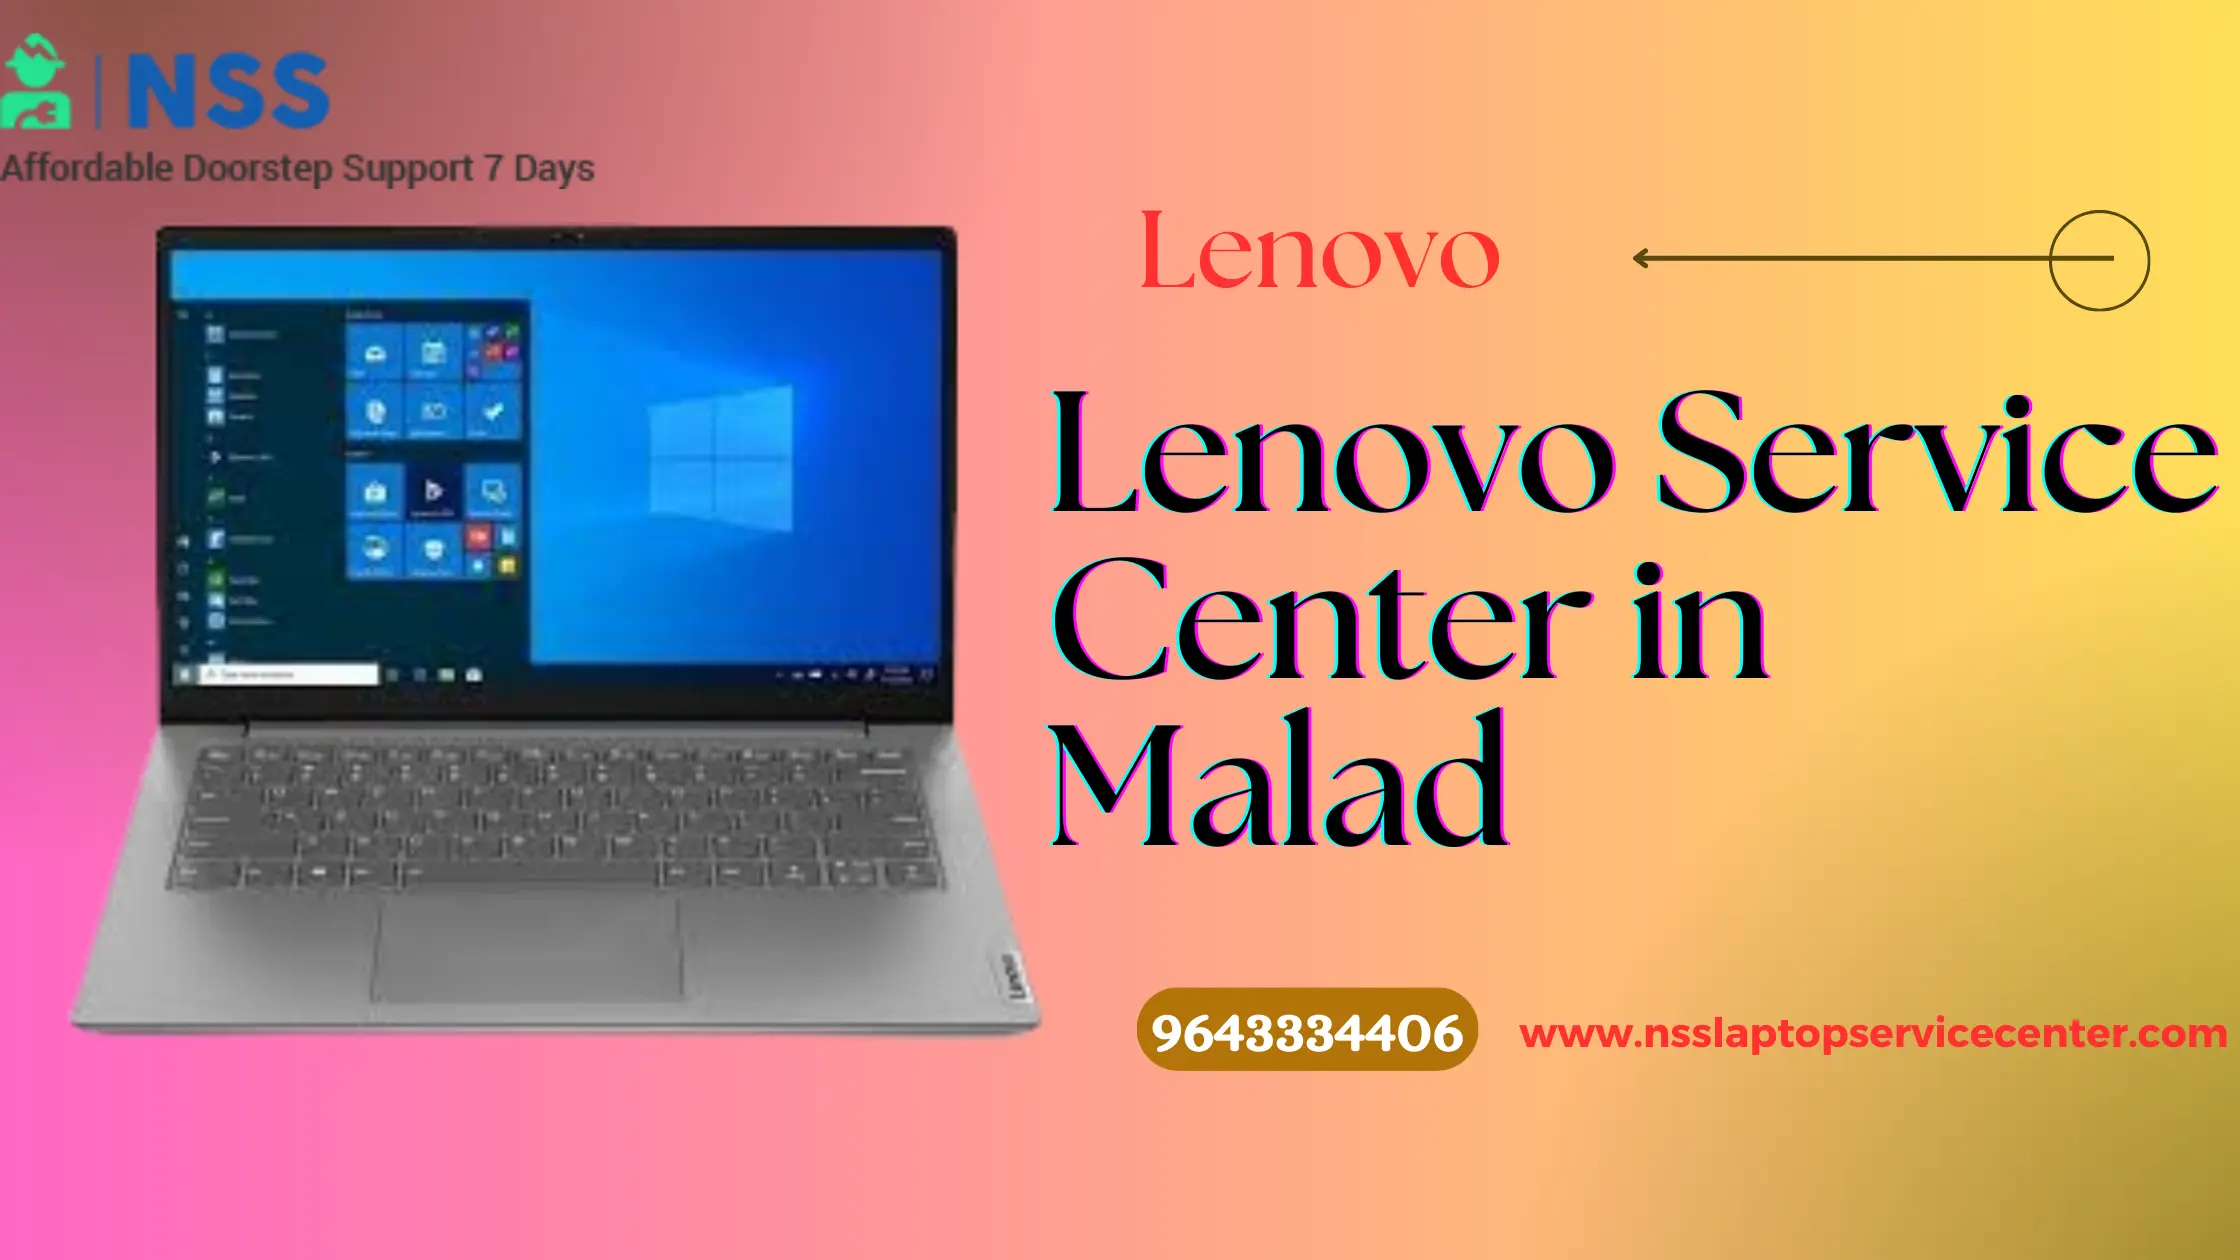 Lenovo Service Center in Malad Near Mumbai